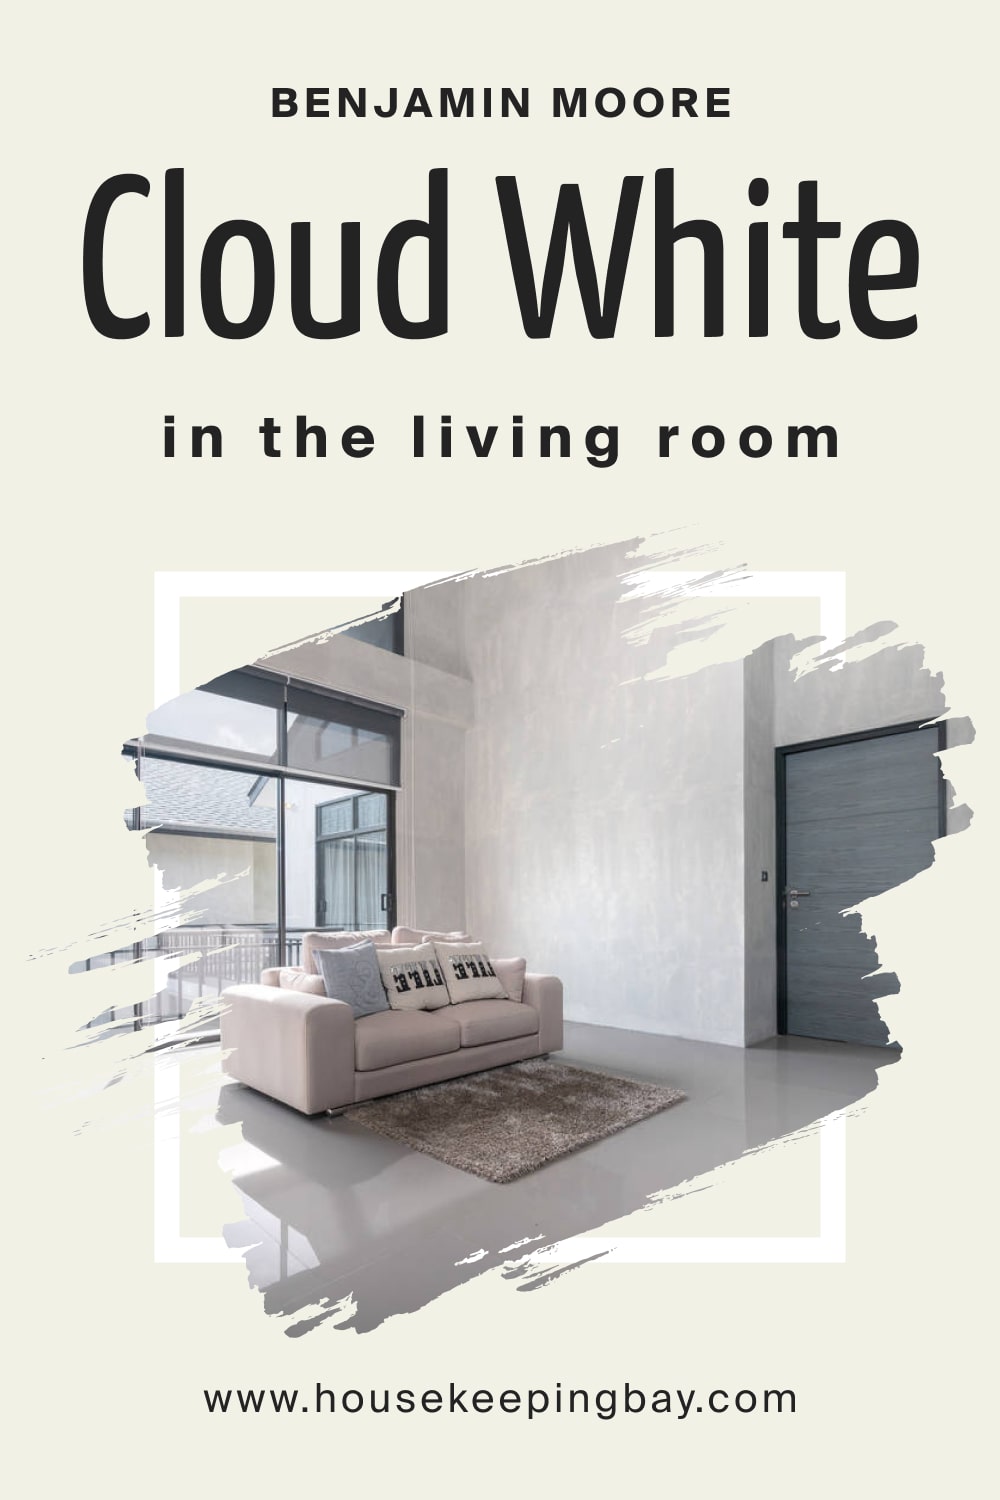 Benjamin Moore. Cloud White OC 130 in the Living Room